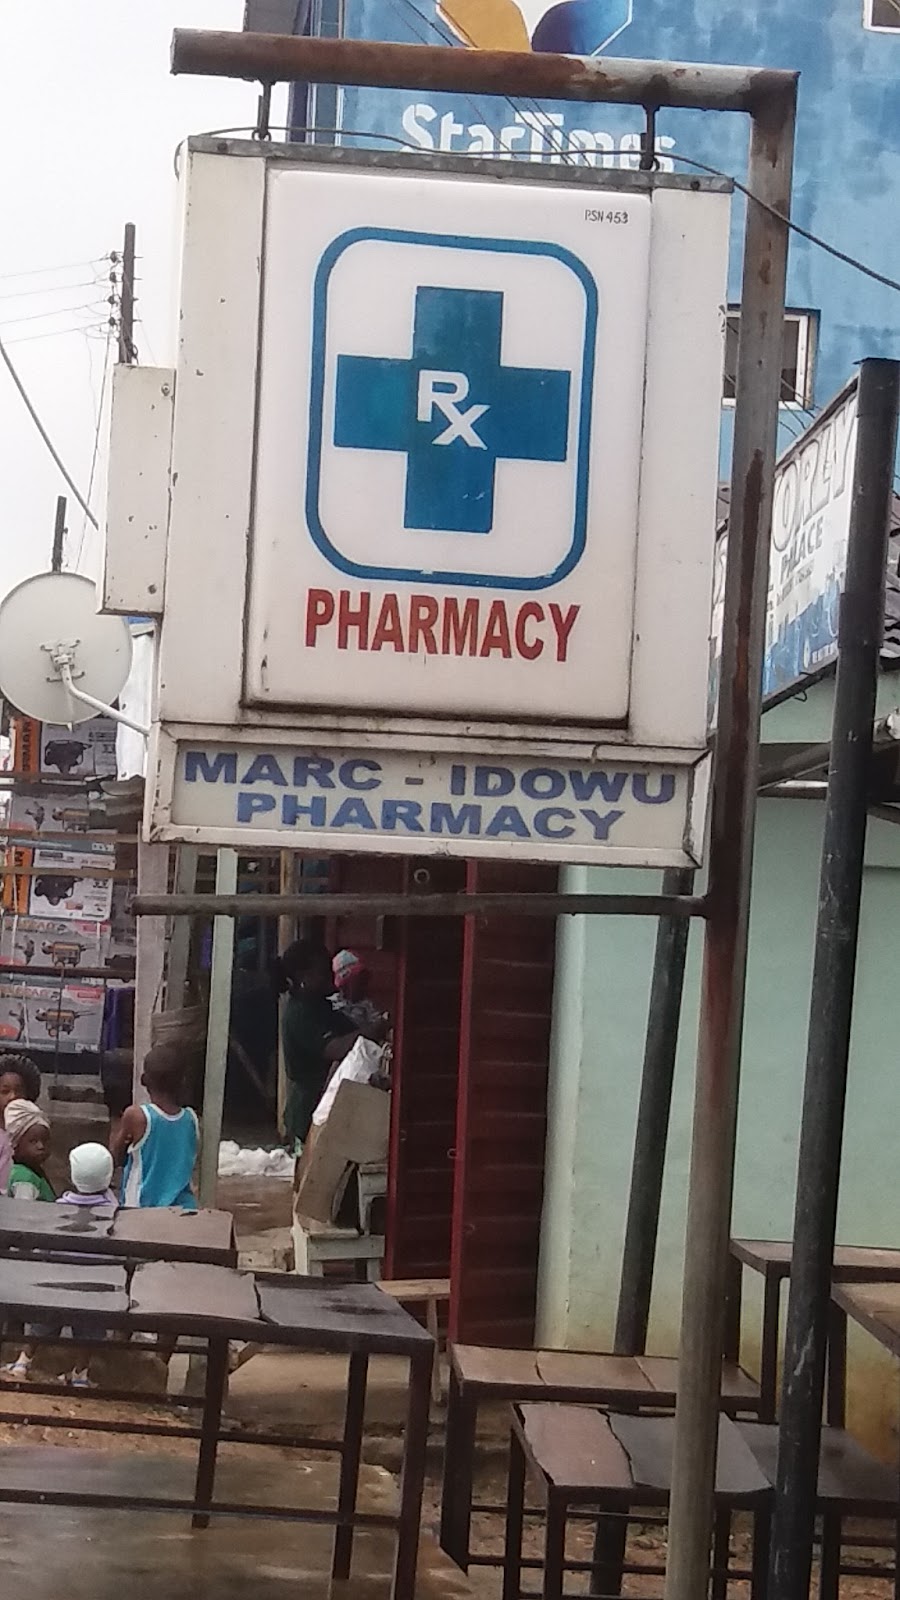 Marc-Idowu Pharmacy